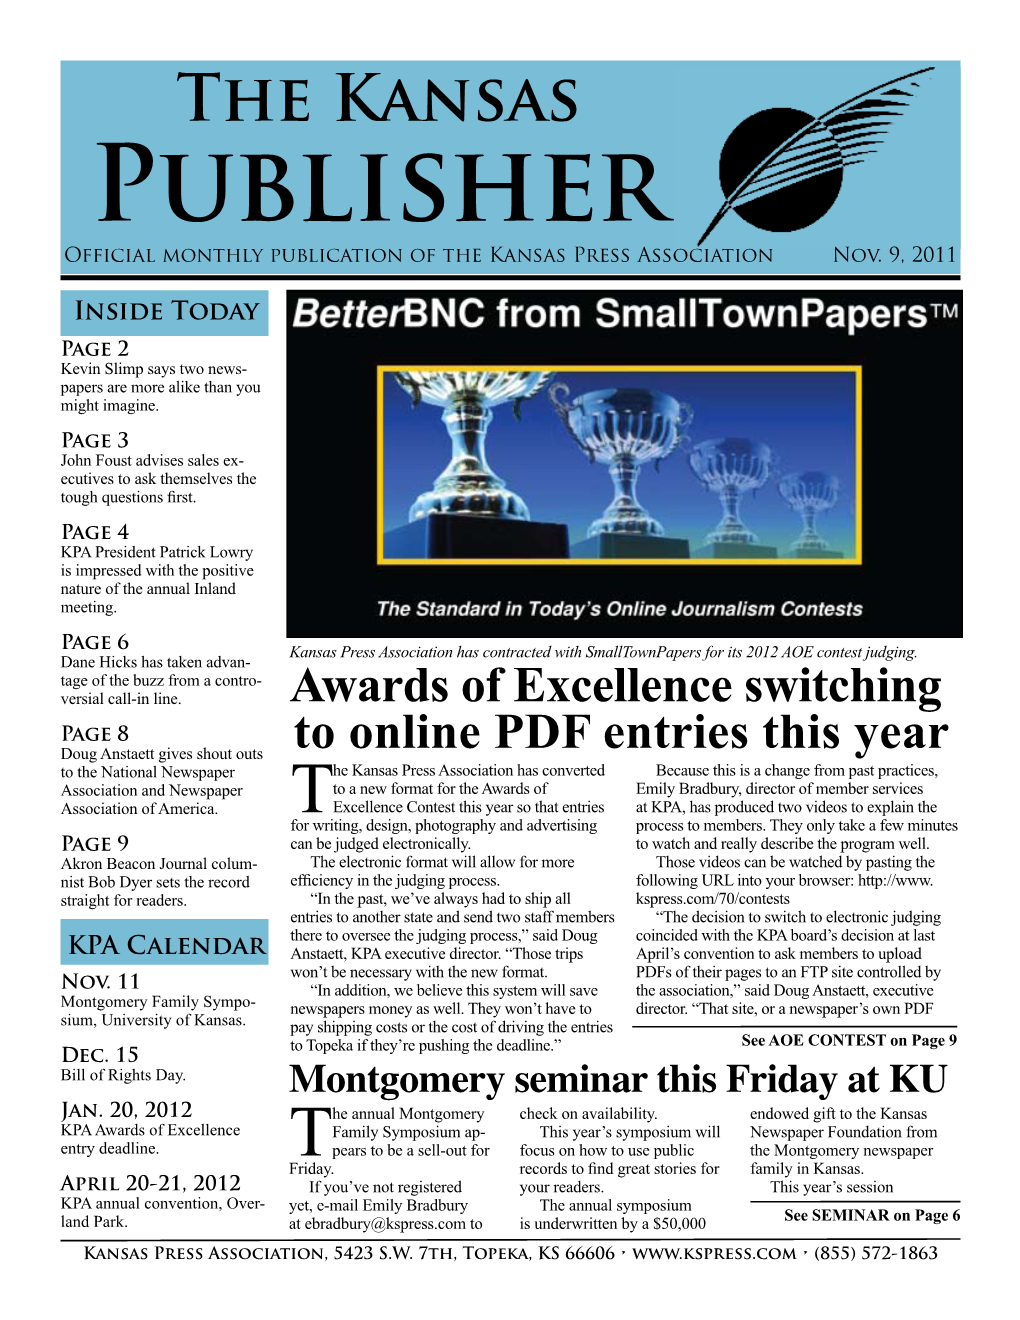 The Kansas Publisher Official Monthly Publication of the Kansas Press Association Nov